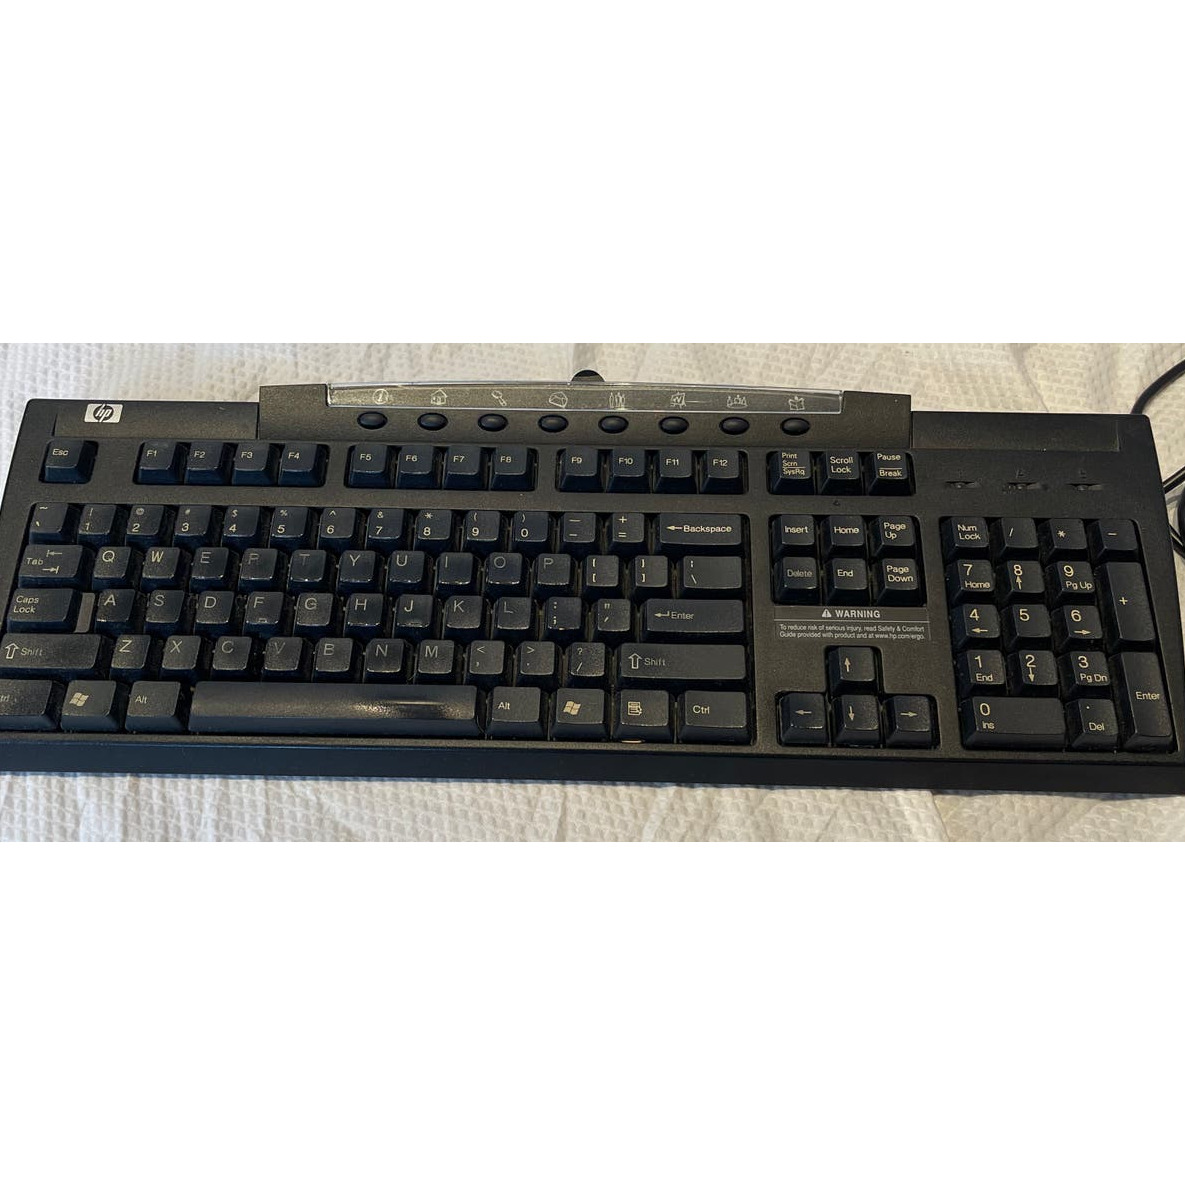 Hewlett Packard HP Wired USB Multimedia Ku-9963 Keyboard Used Tested Works